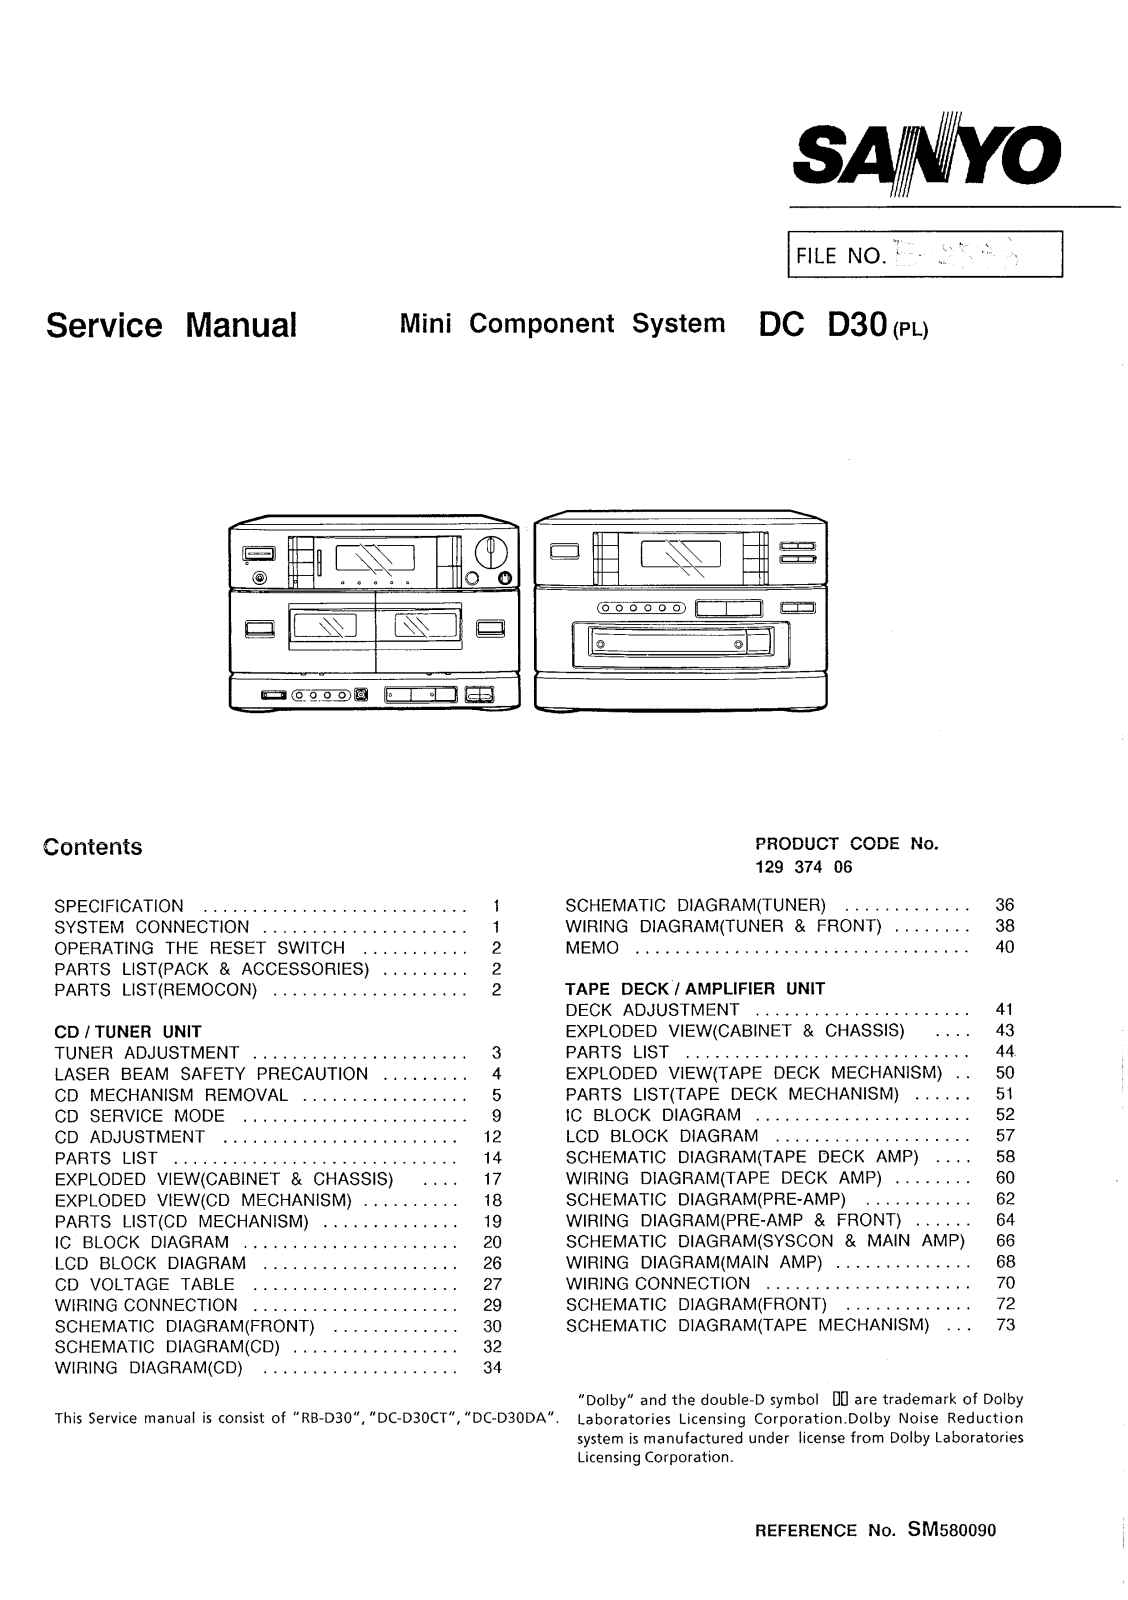 Sanyo DCD-30 Service manual